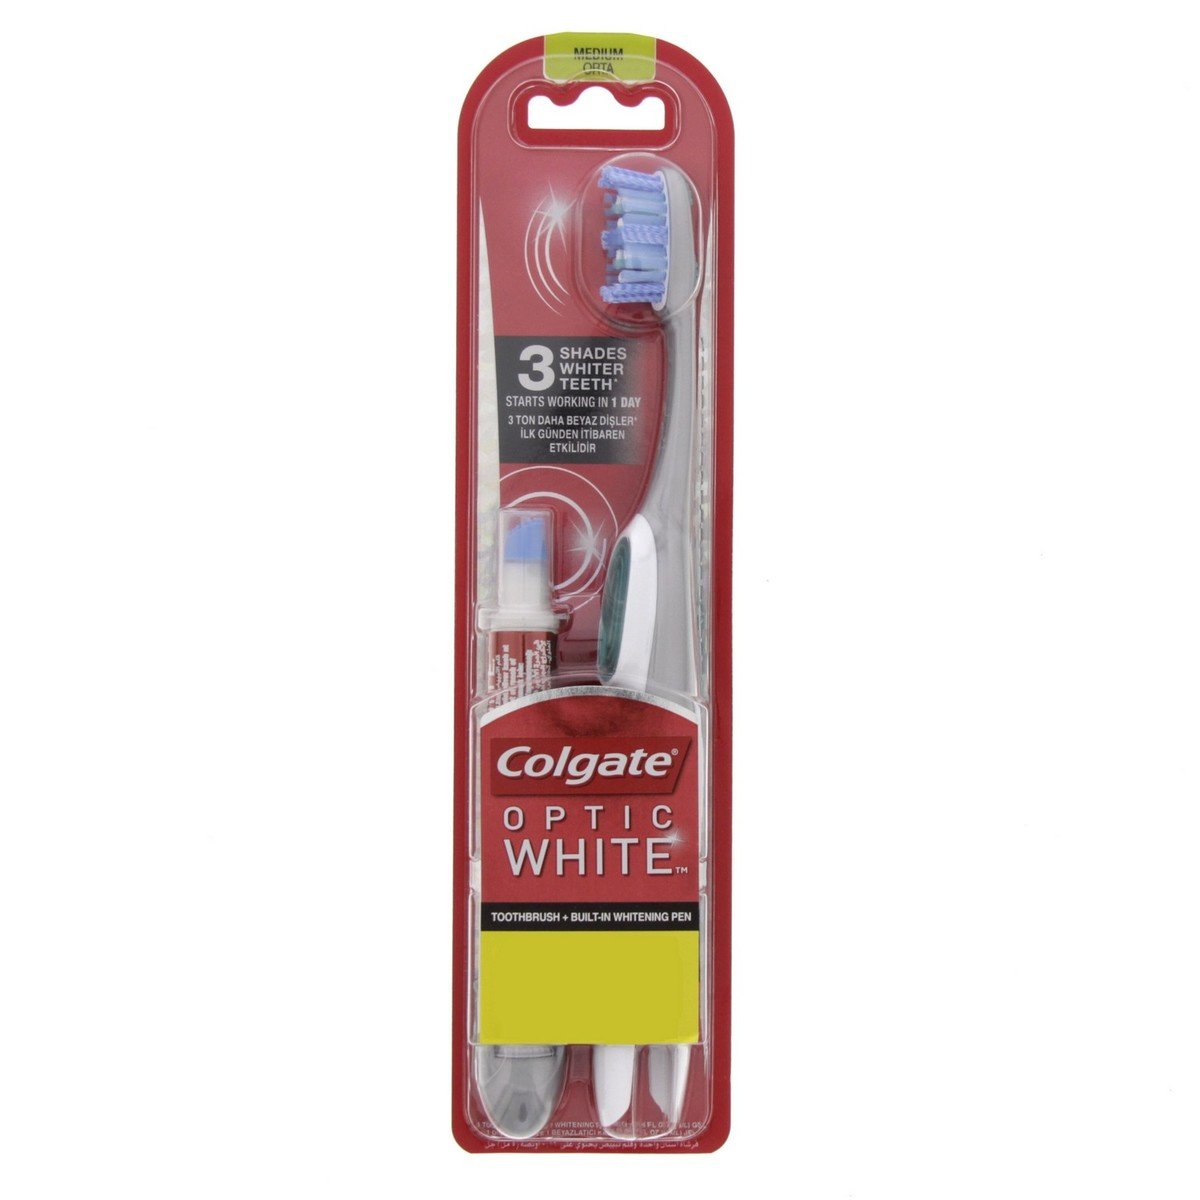 Colgate Optic White Tooth Brush + Built in Whitening Pen 1 pc